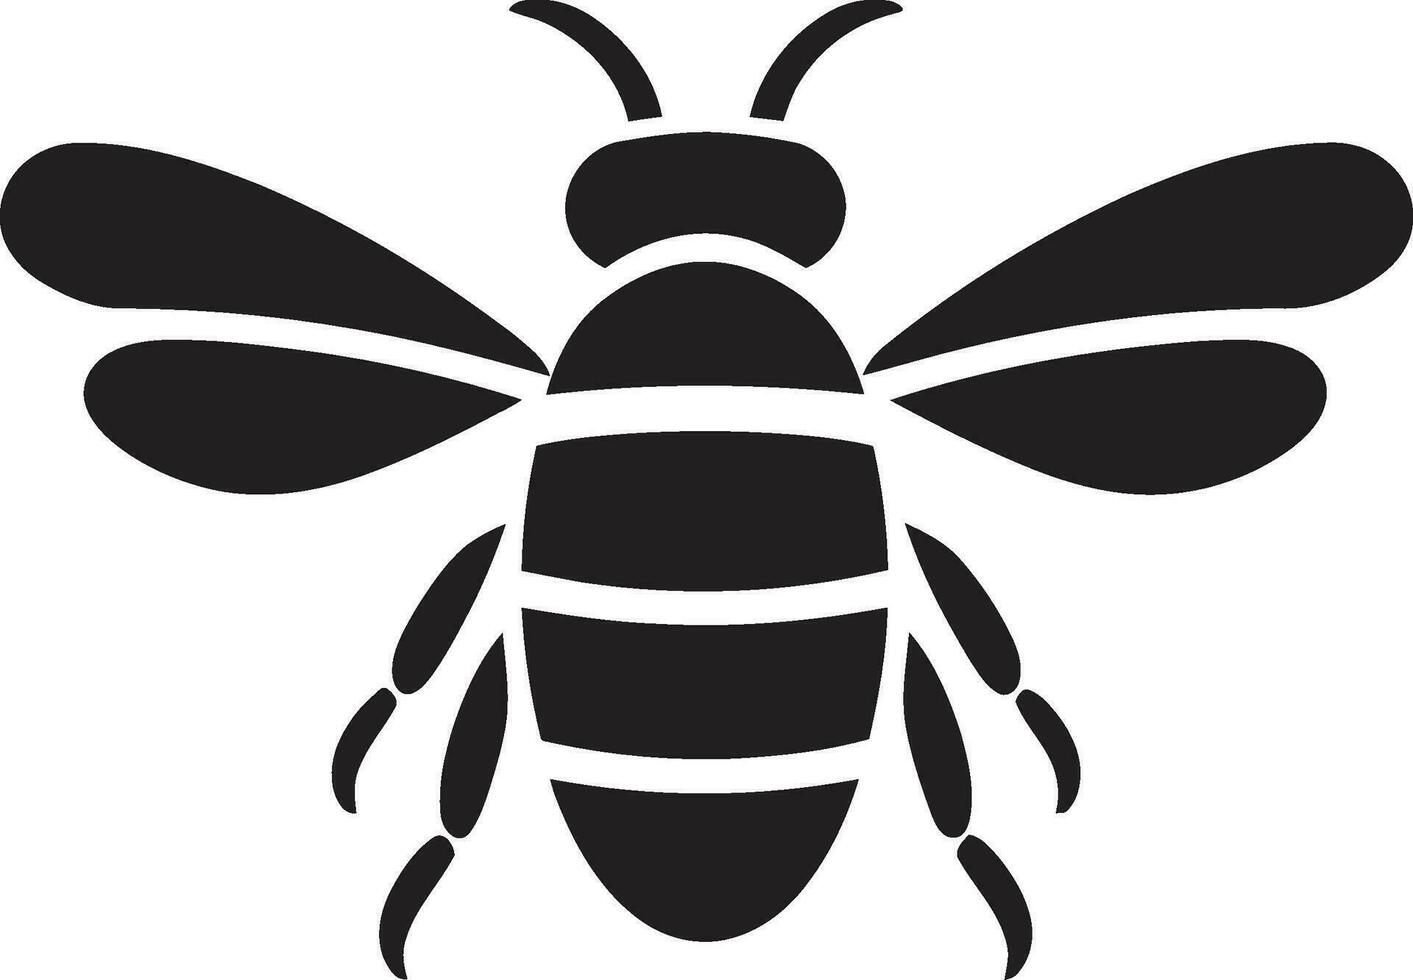 Black Beehive Heraldry Honey Bee Kingdom Insignia vector